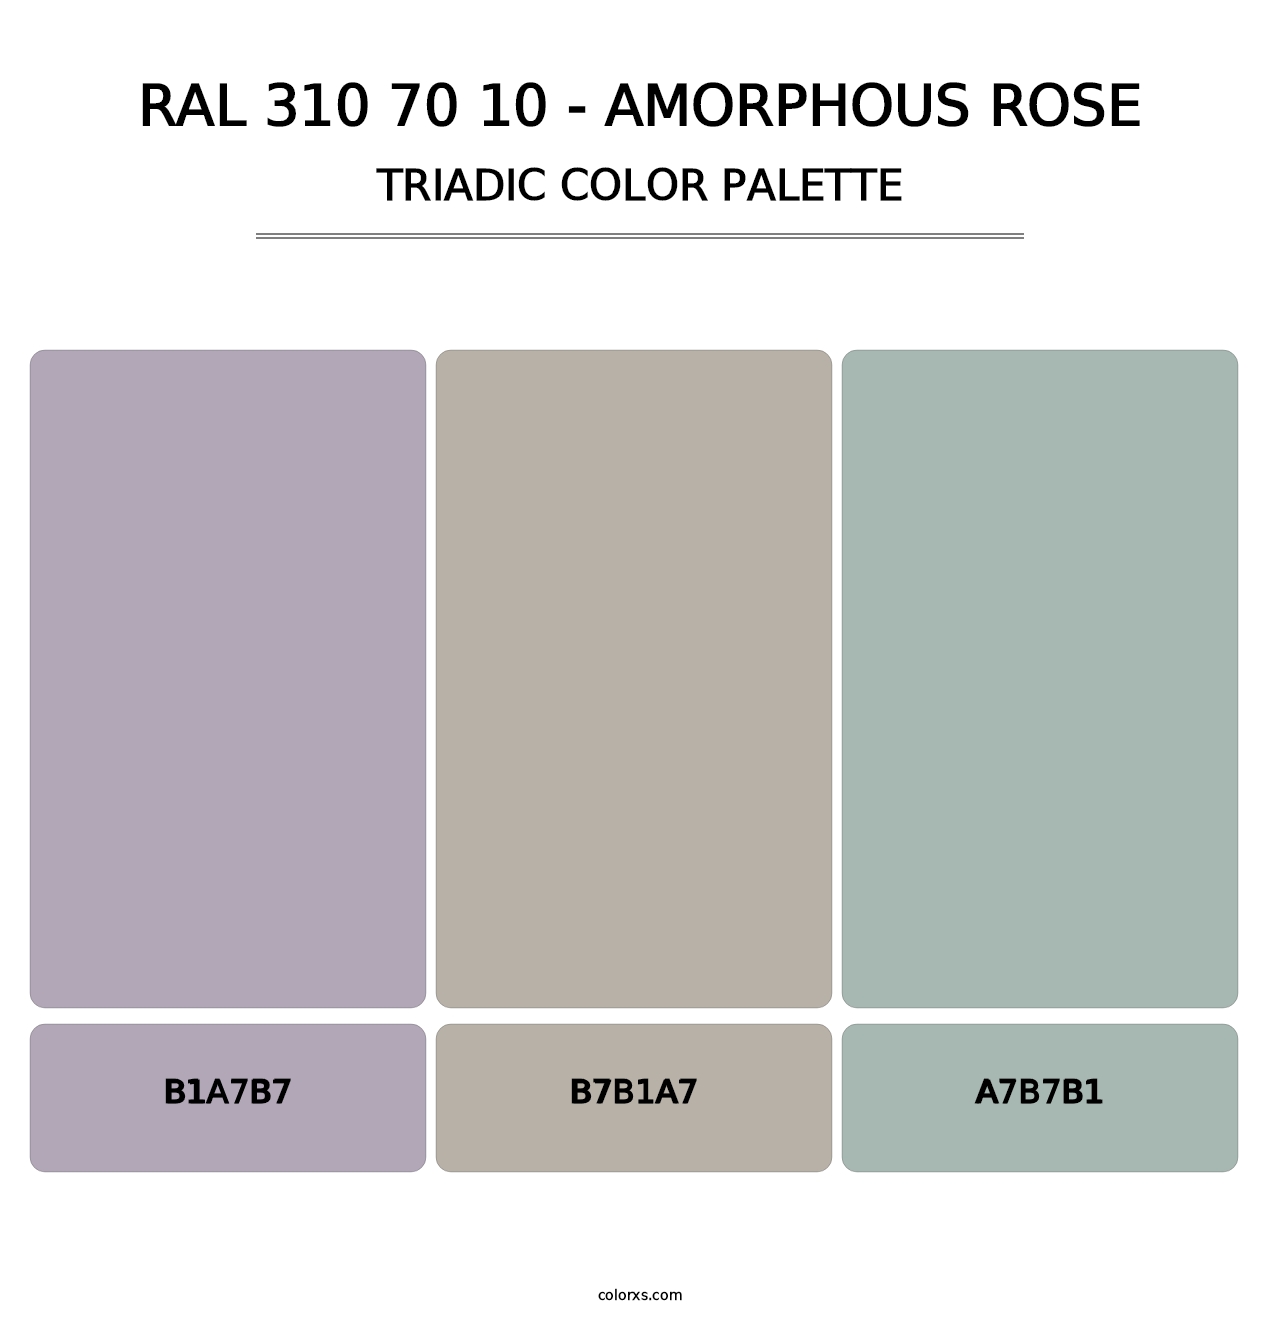 RAL 310 70 10 - Amorphous Rose - Triadic Color Palette